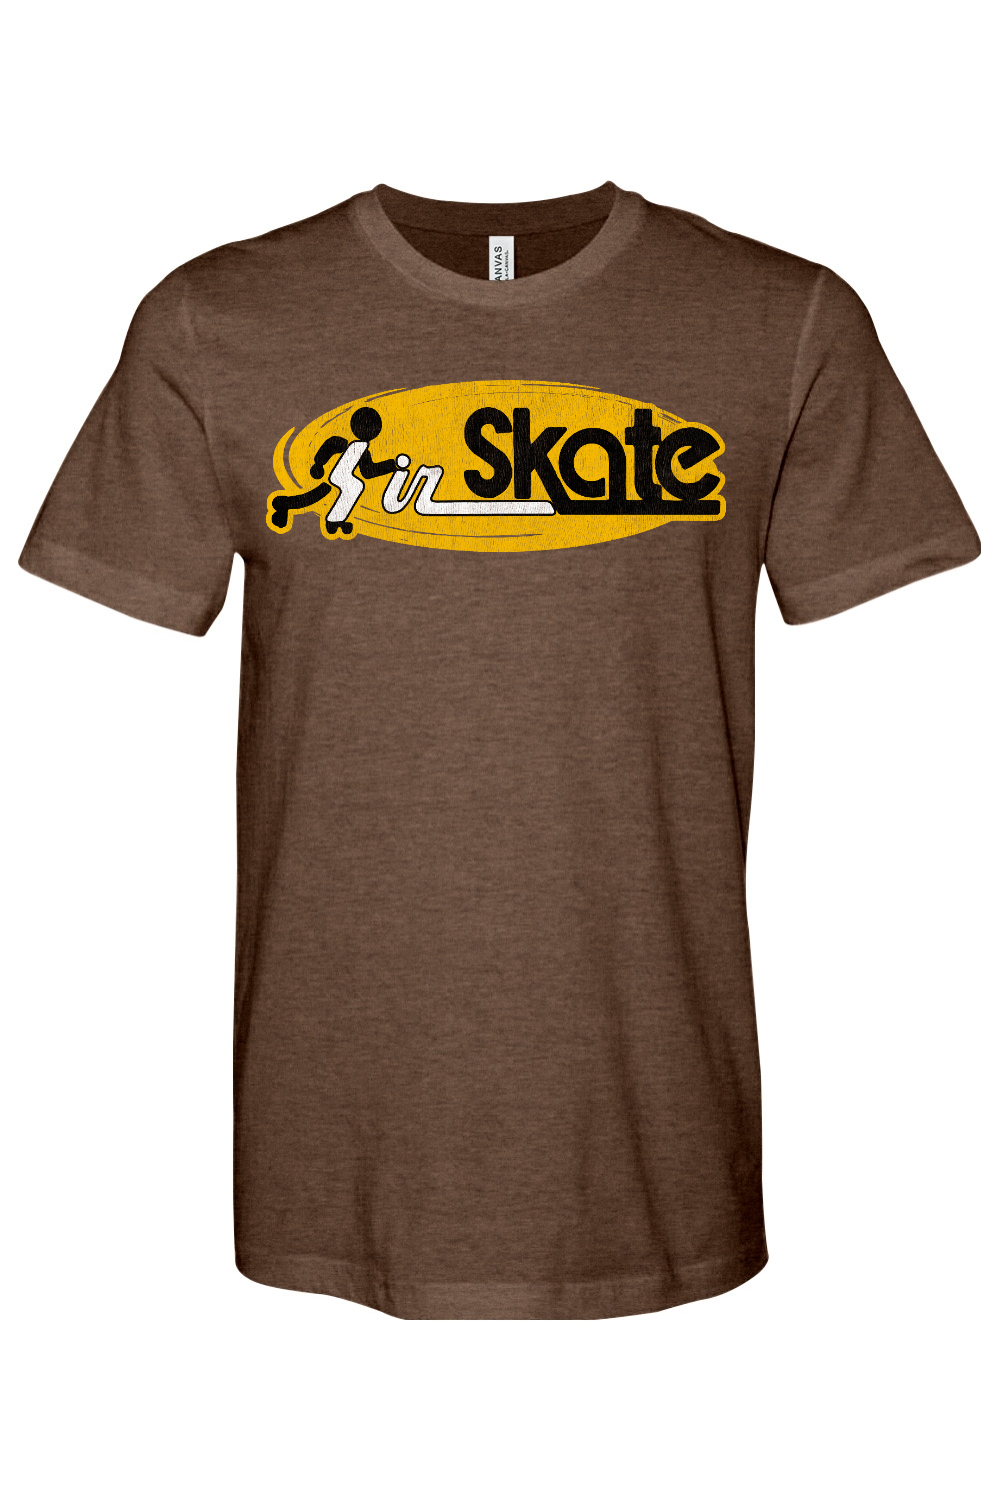 Sir Skate - Altoona/ State College, PA - Yinzylvania